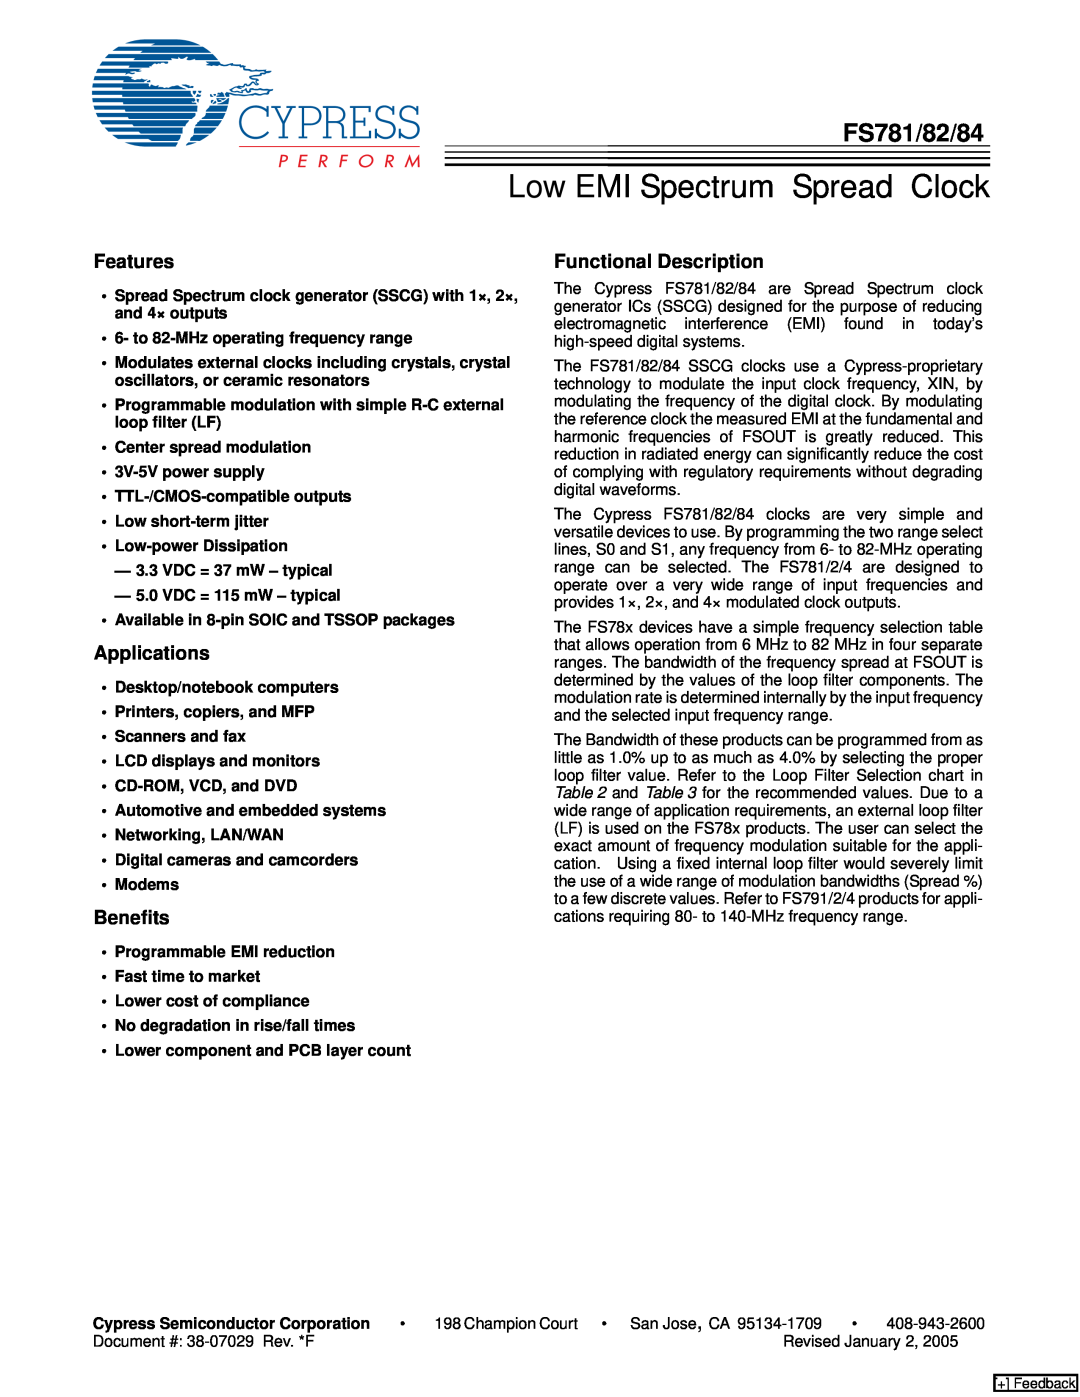 Cypress manual FS781/82/84, Features, Applications, Benefits, Functional Description, Low EMI Spectrum Spread Clock 